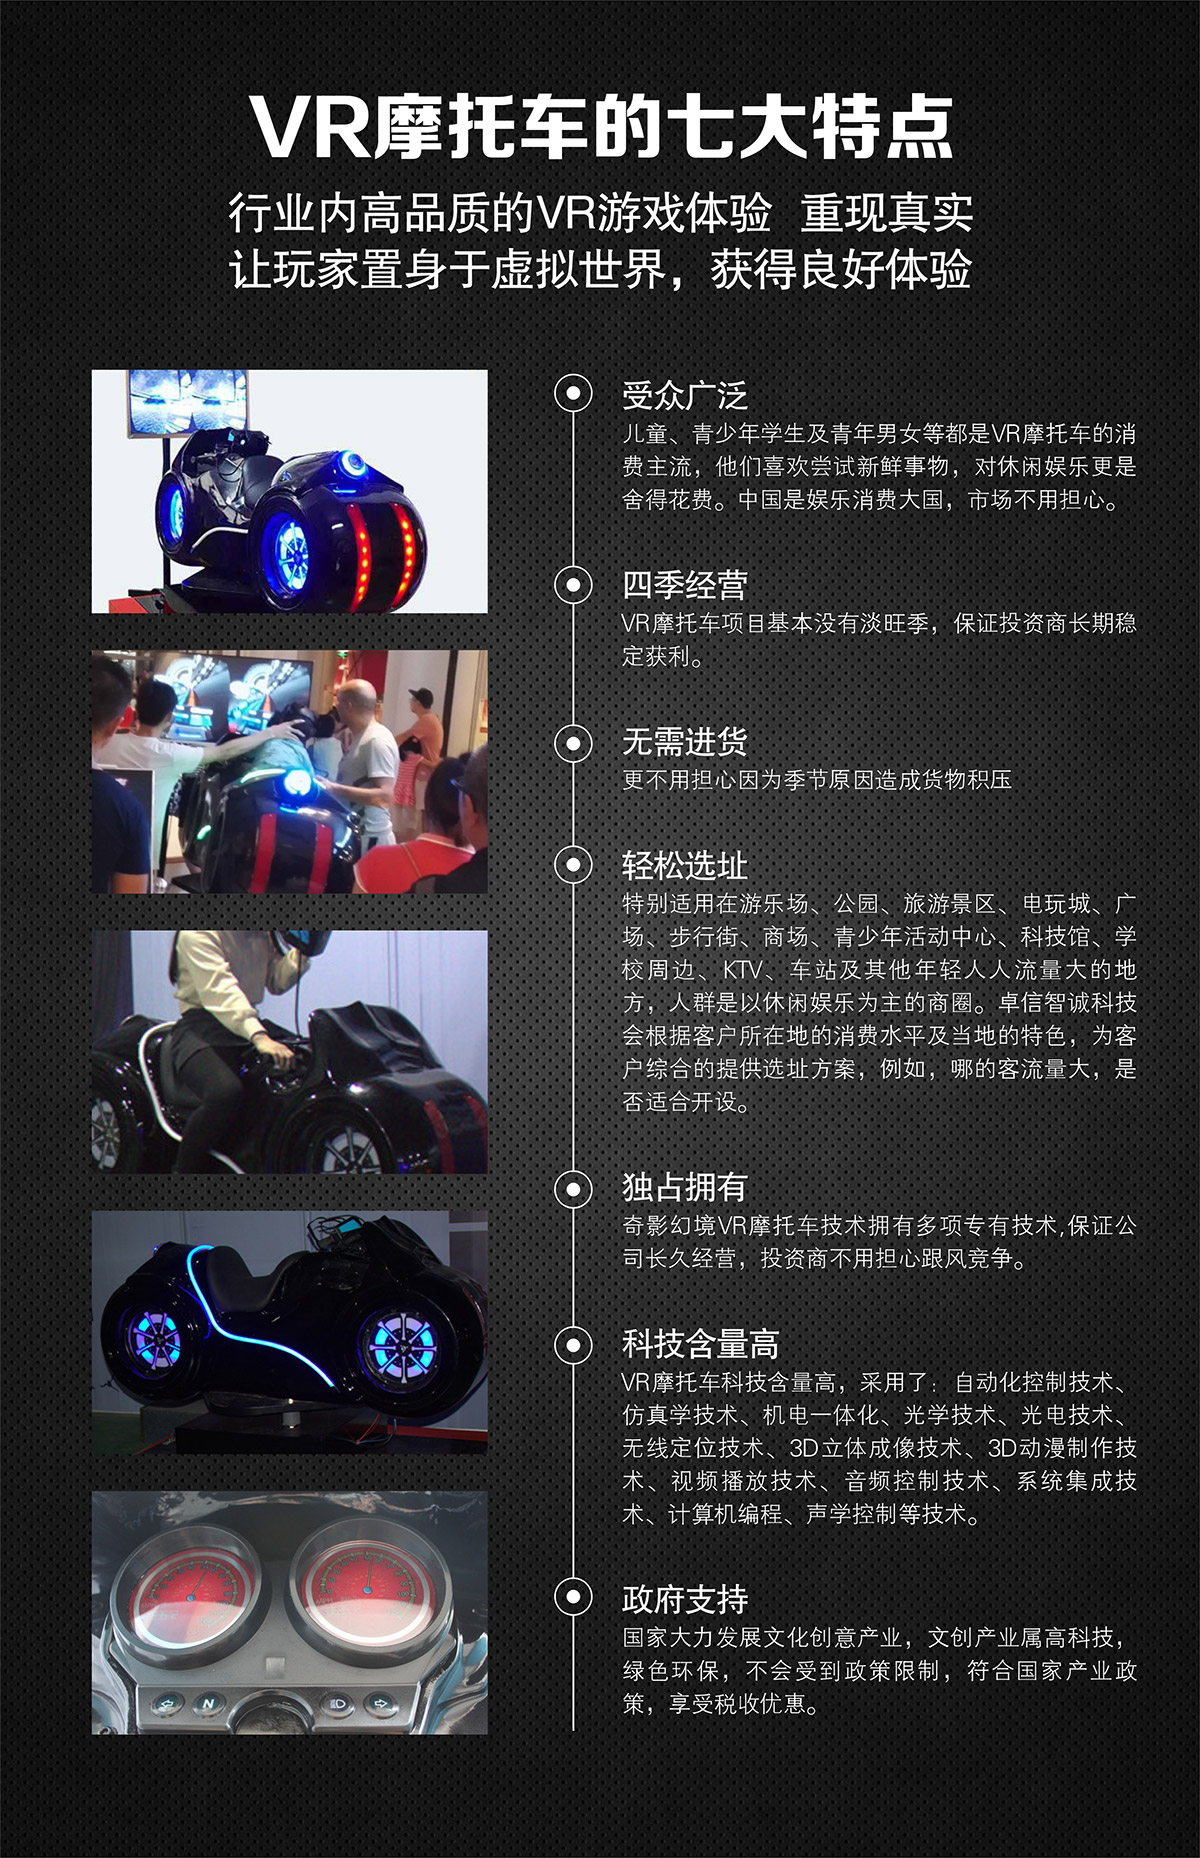 VR台风摩托车特点高品质游戏体验.jpg